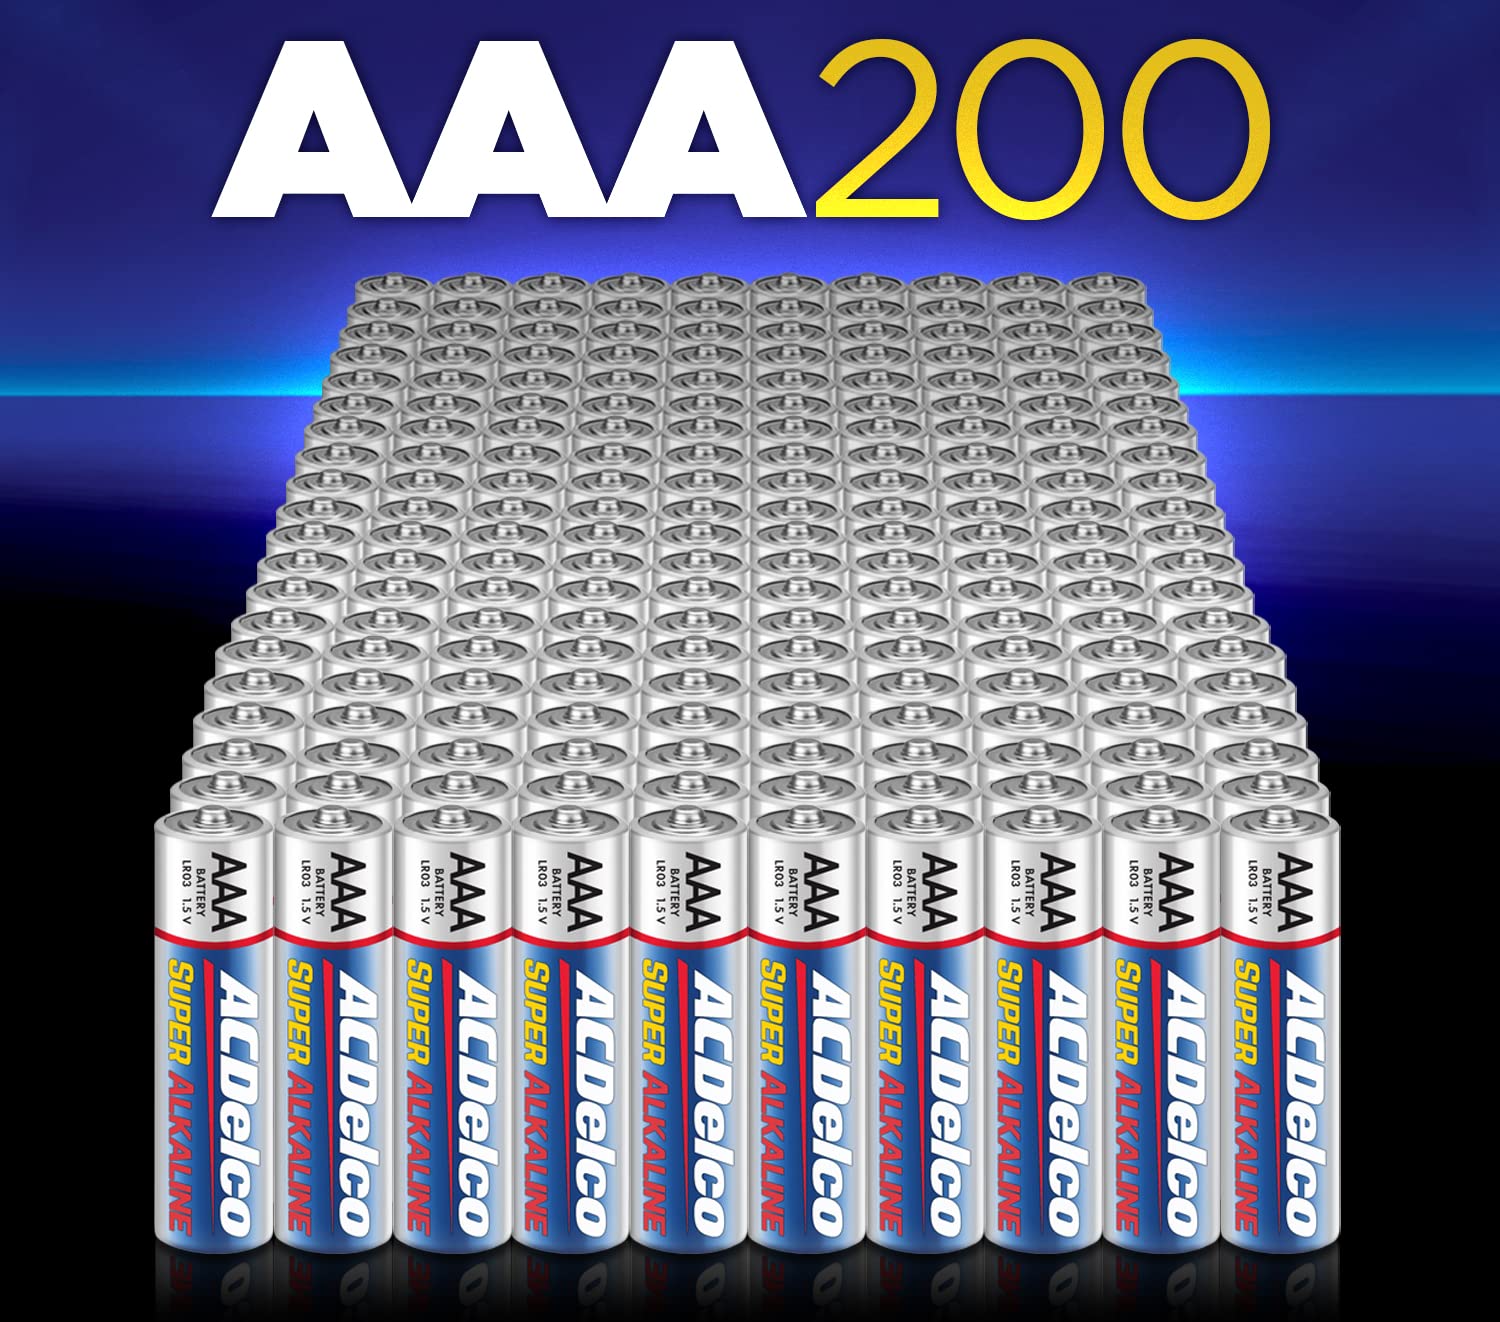 ACDelco AAA Batteries, Maximum Power Super Alkaline Battery, 10-Year Shelf Life, Reclosable Packaging, 200 Count